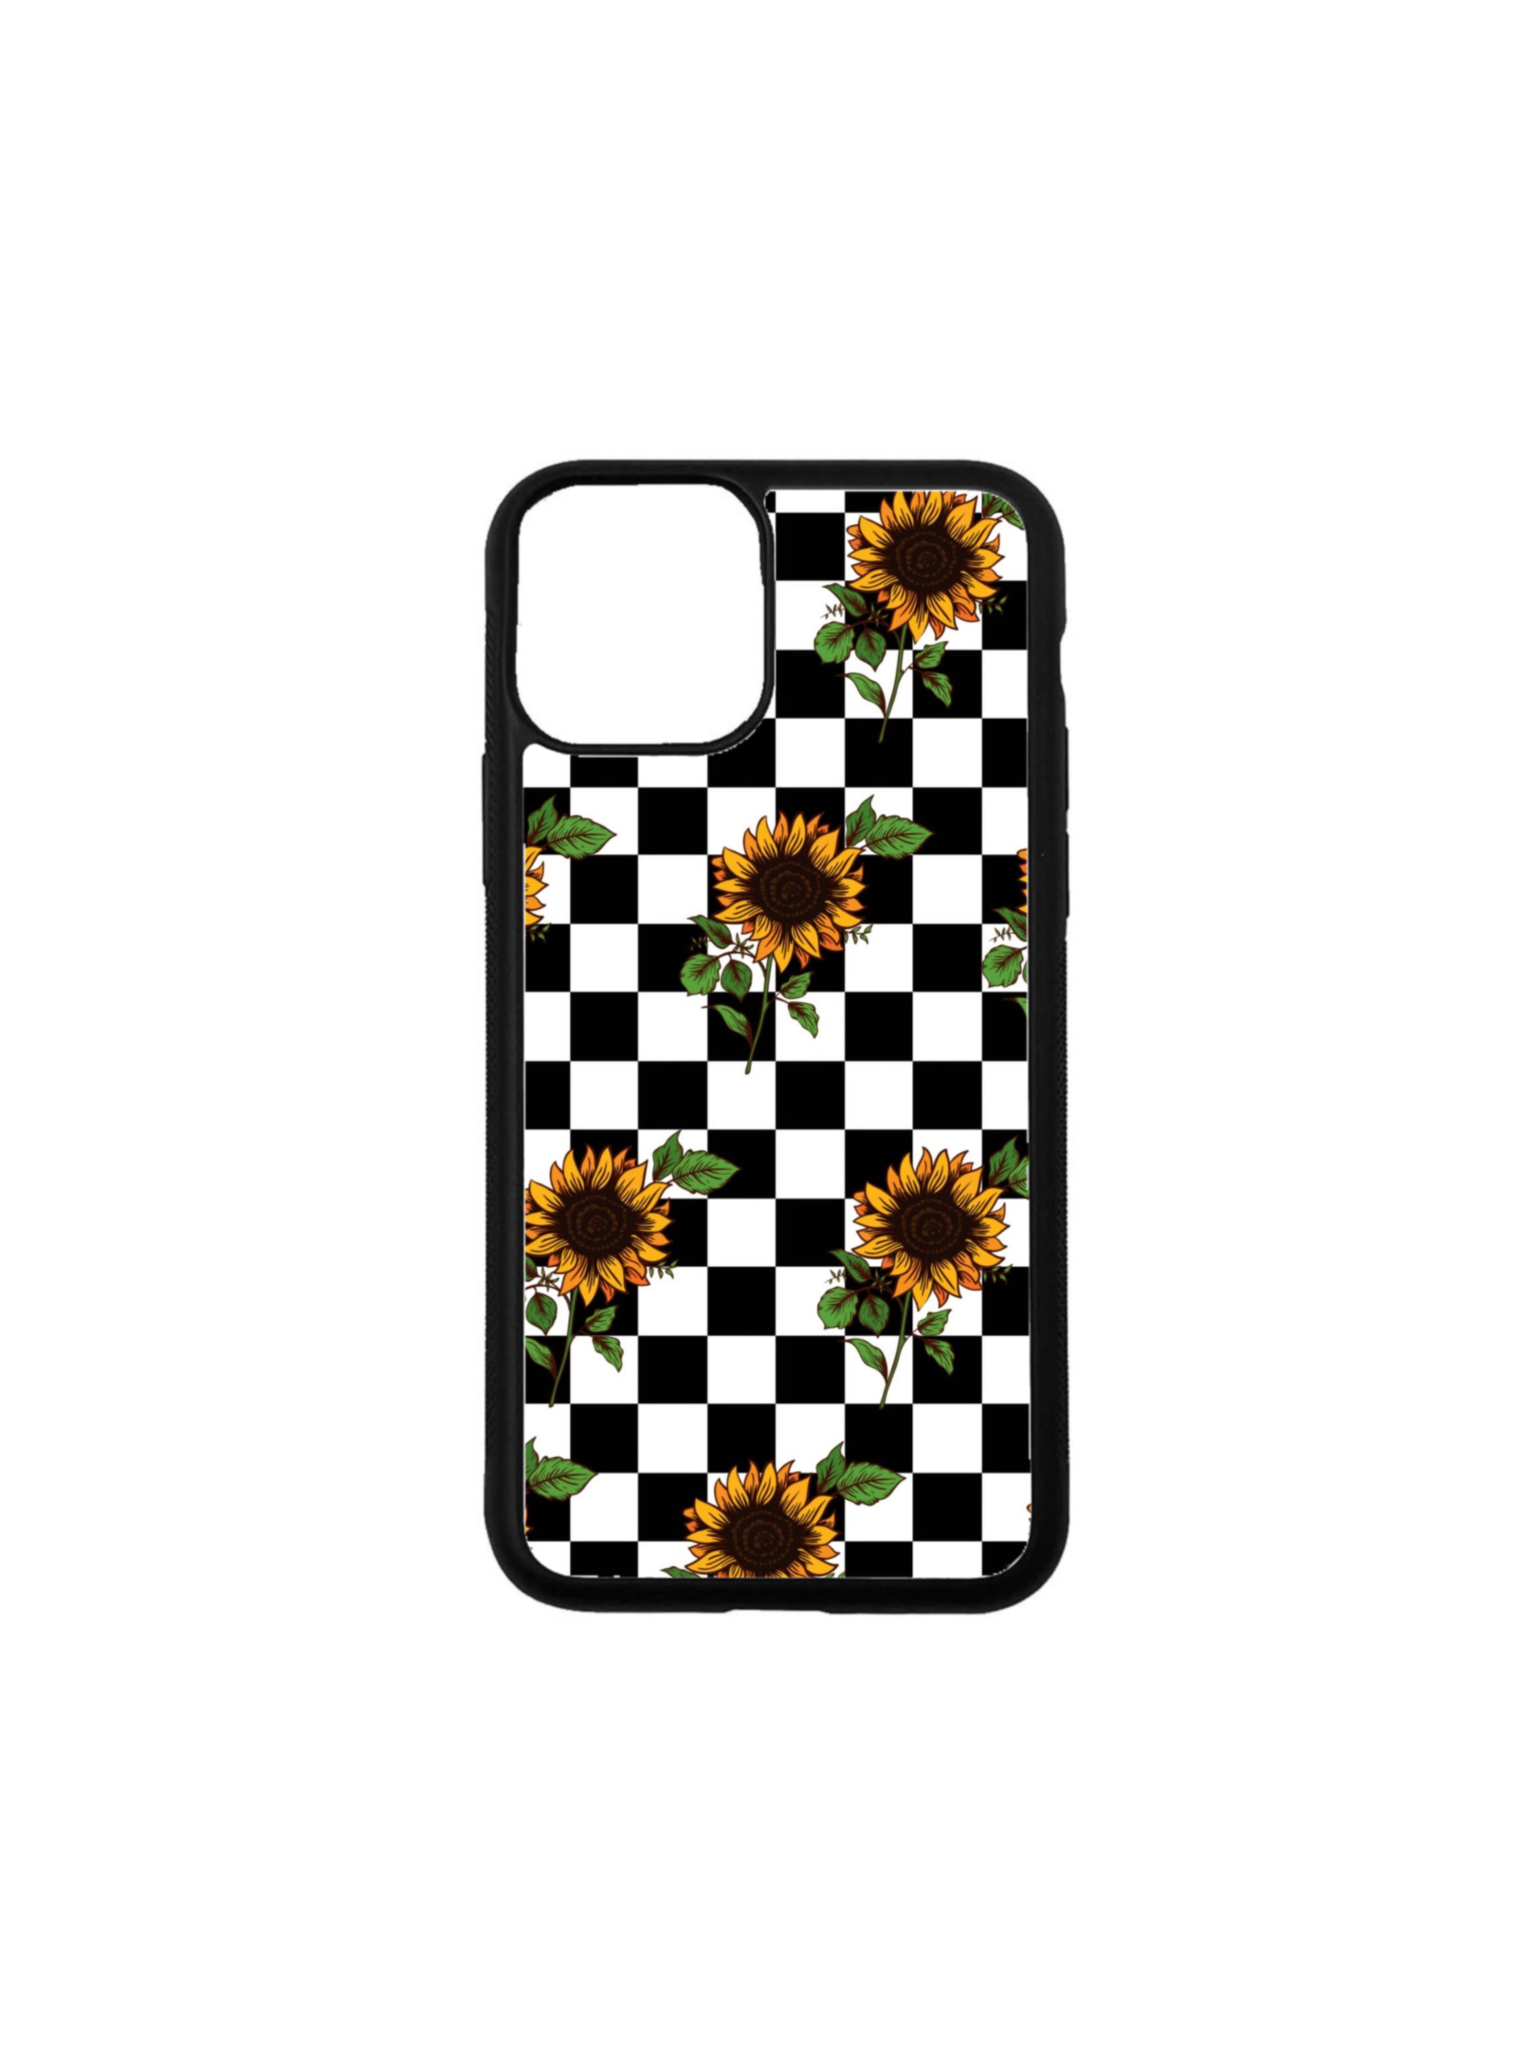 Sunflower checkers case